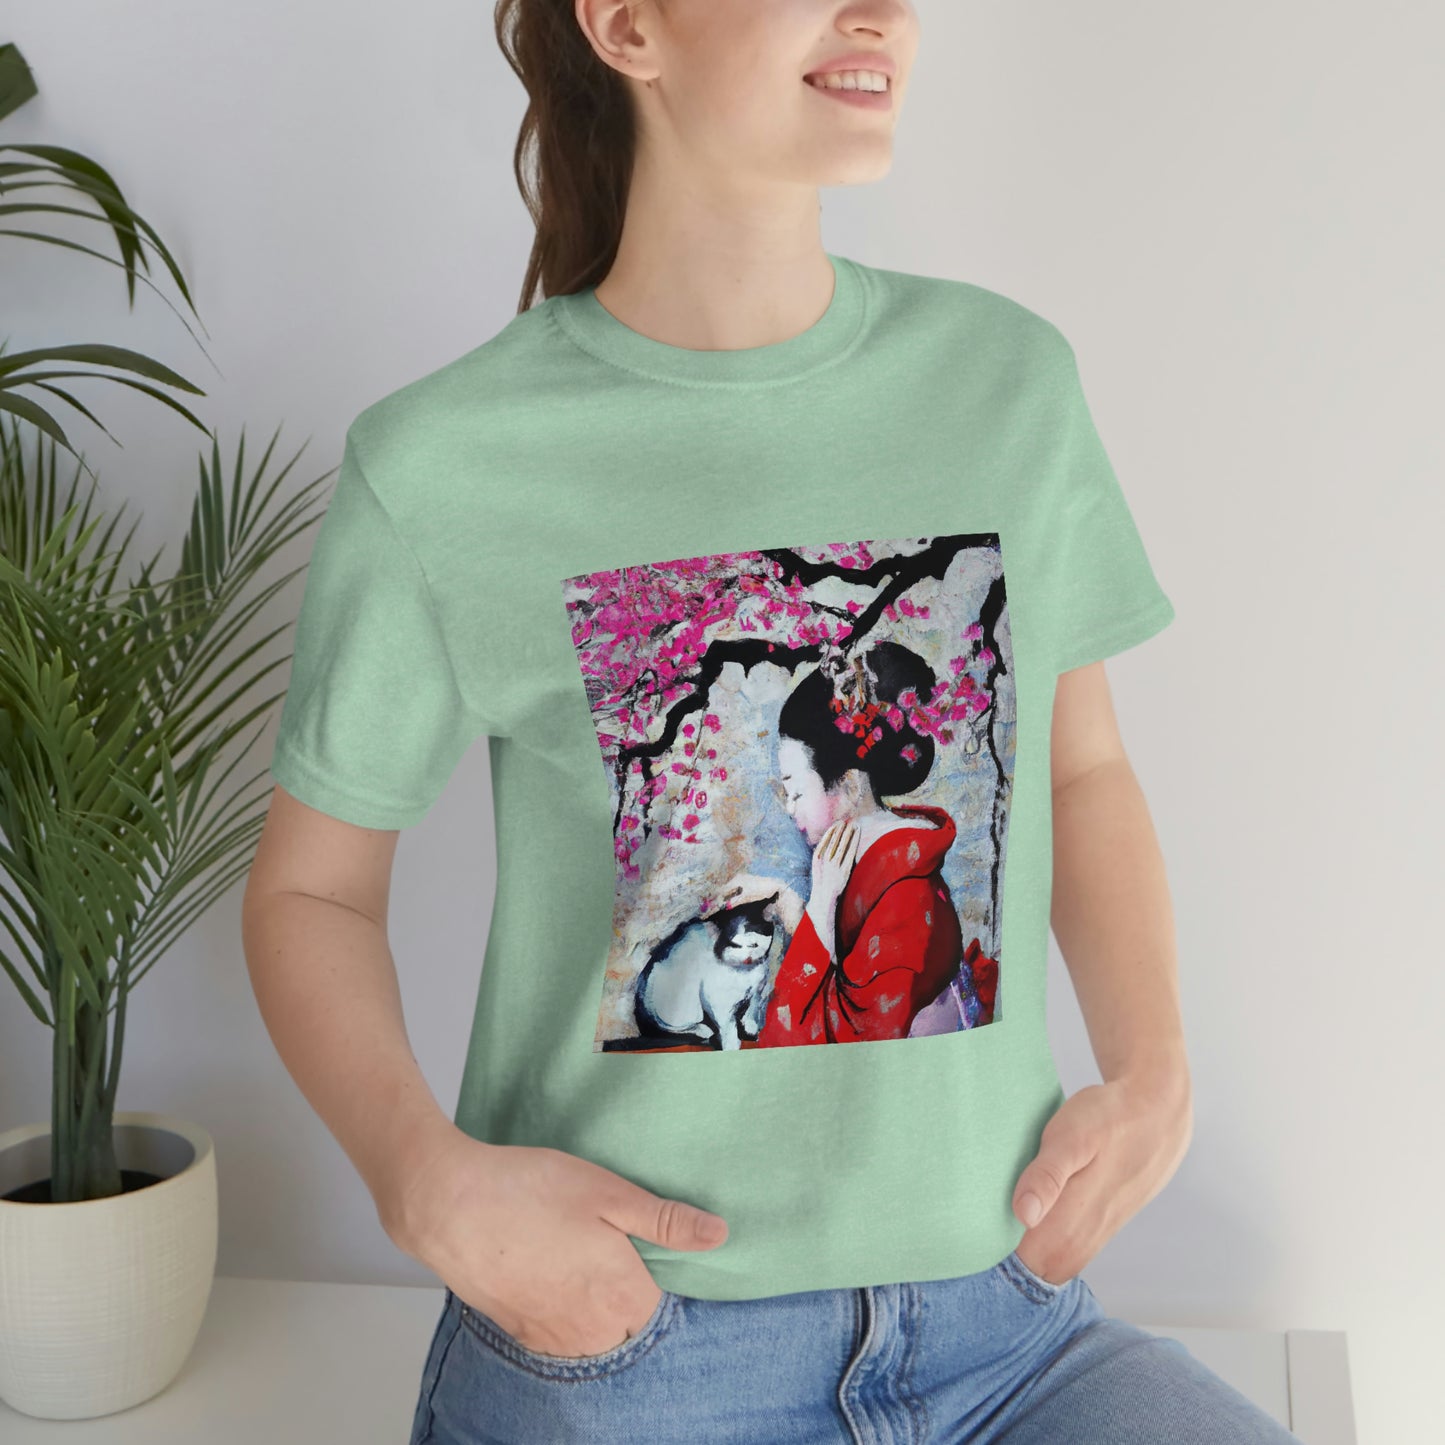 Geisha and a cat T-shirt, art painting maiko and a cat and a sakura tree shirt, Asian-inspired art t shirt, feudal japan tee, cat lover gift